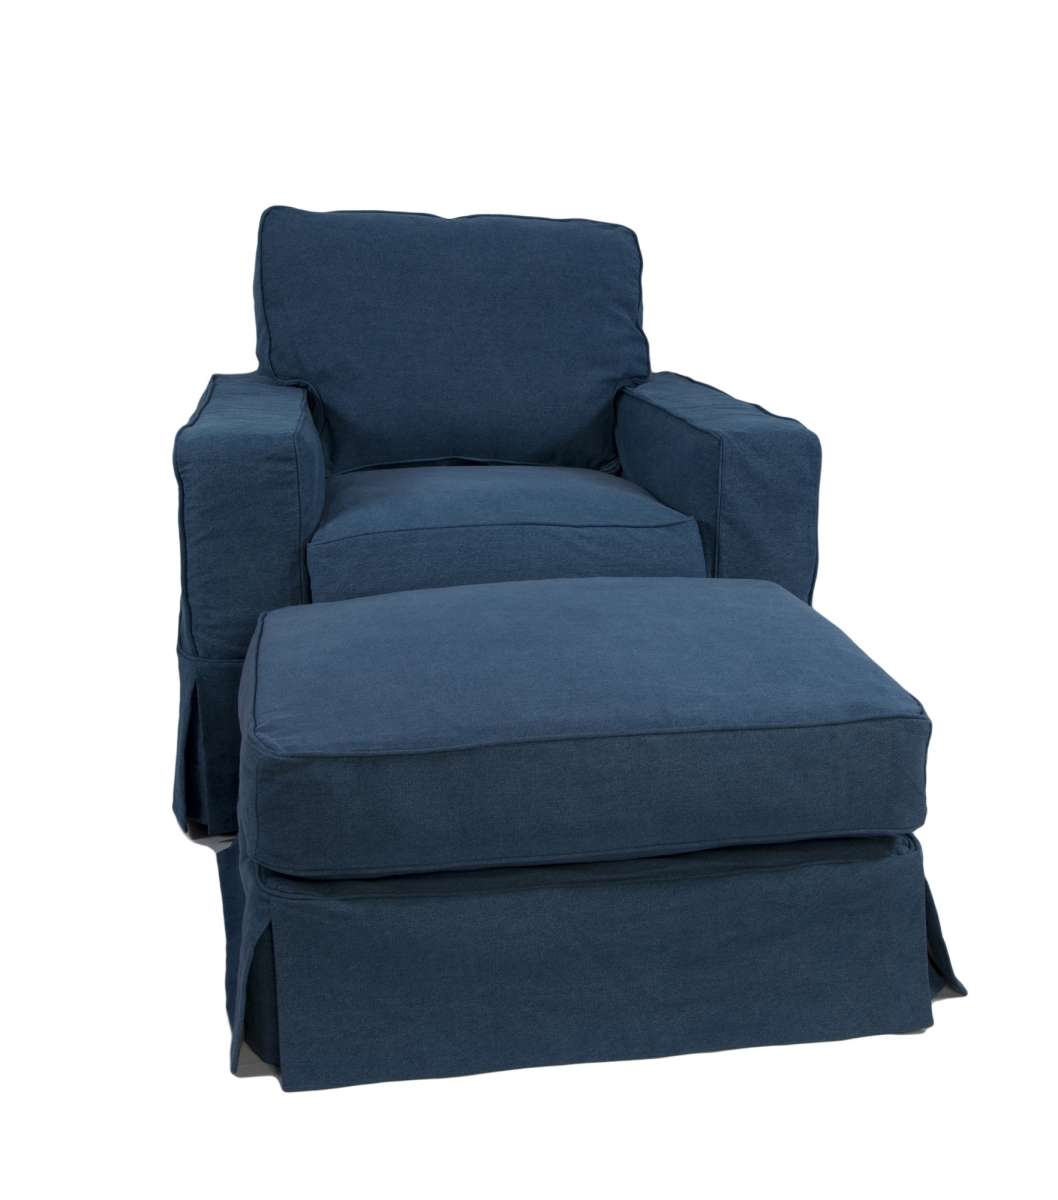 Su-108520-30-410046 37.8 X 38.6 X 39.4 In. Americana Slipcovered Chair & Ottoman - Indigo Blue